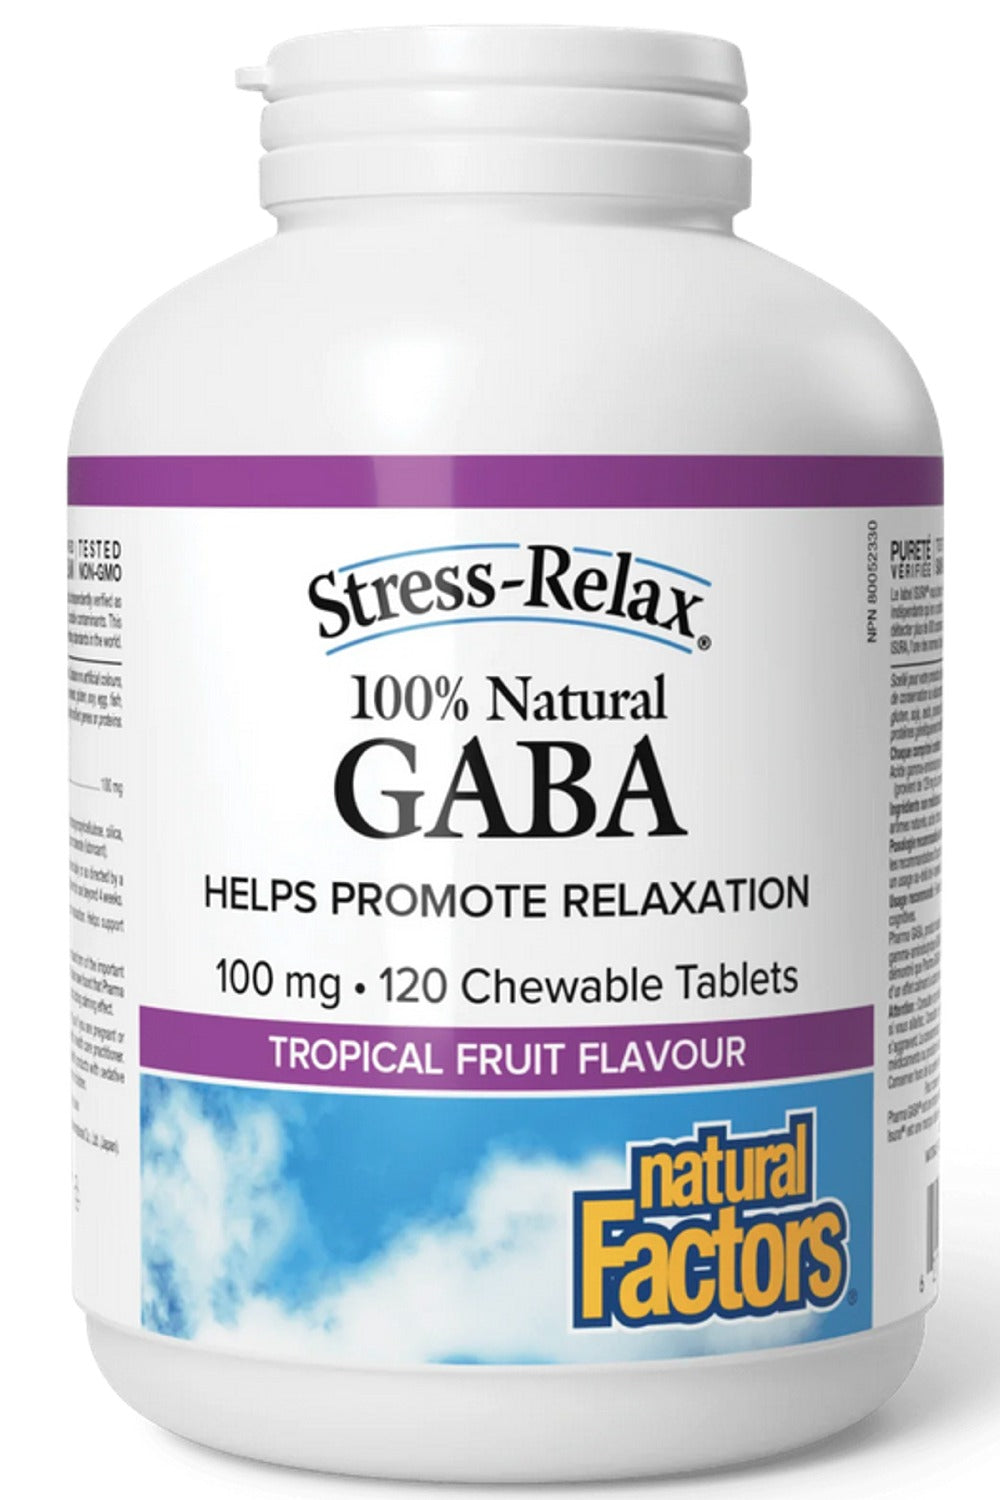 Copy of NATURAL FACTORS STRESS RELAX Gaba (100% Natural - 100 mg - 120 Chewables)